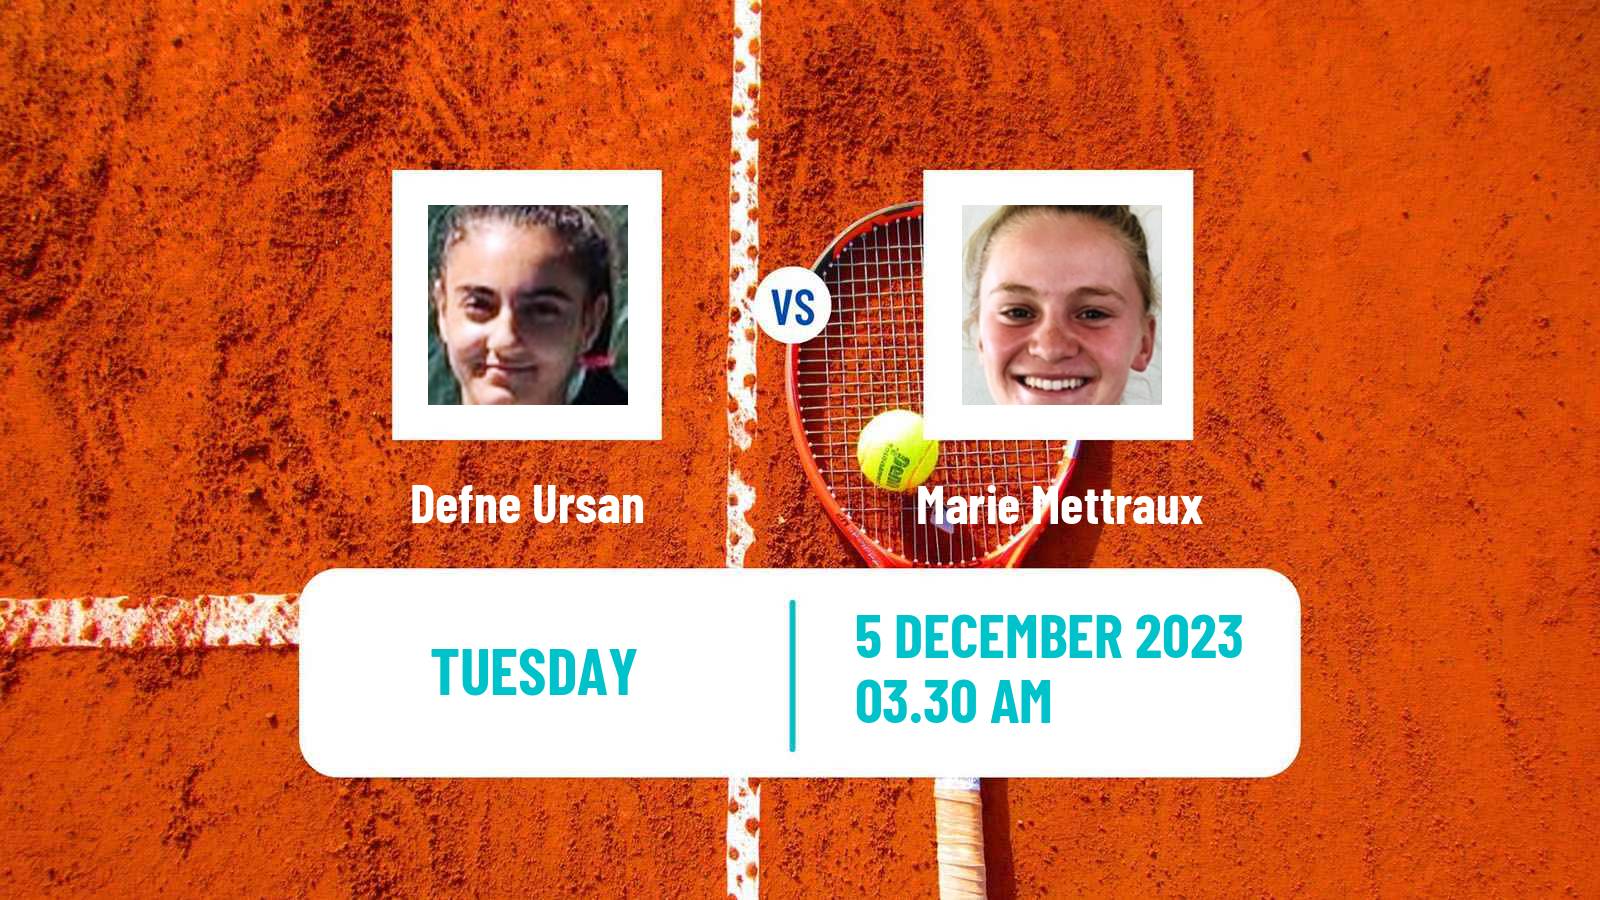 Tennis ITF W15 Antalya 21 Women Defne Ursan - Marie Mettraux